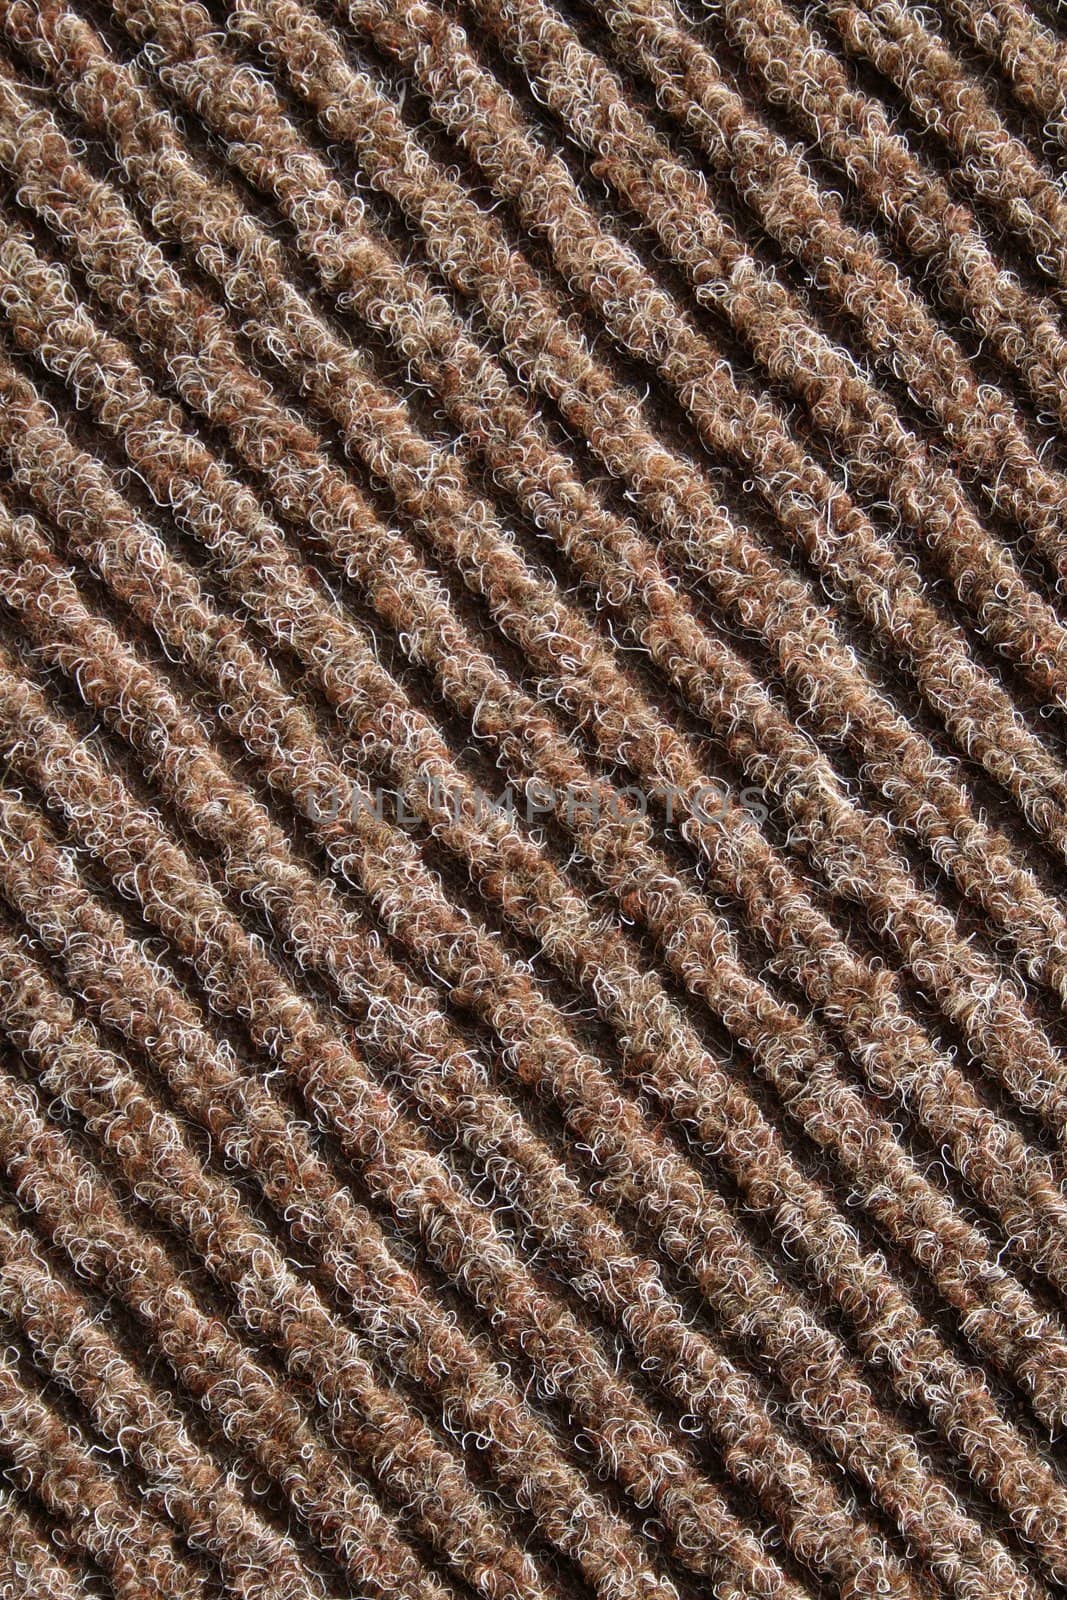 Diagonal striped pattern of a carpet by anikasalsera